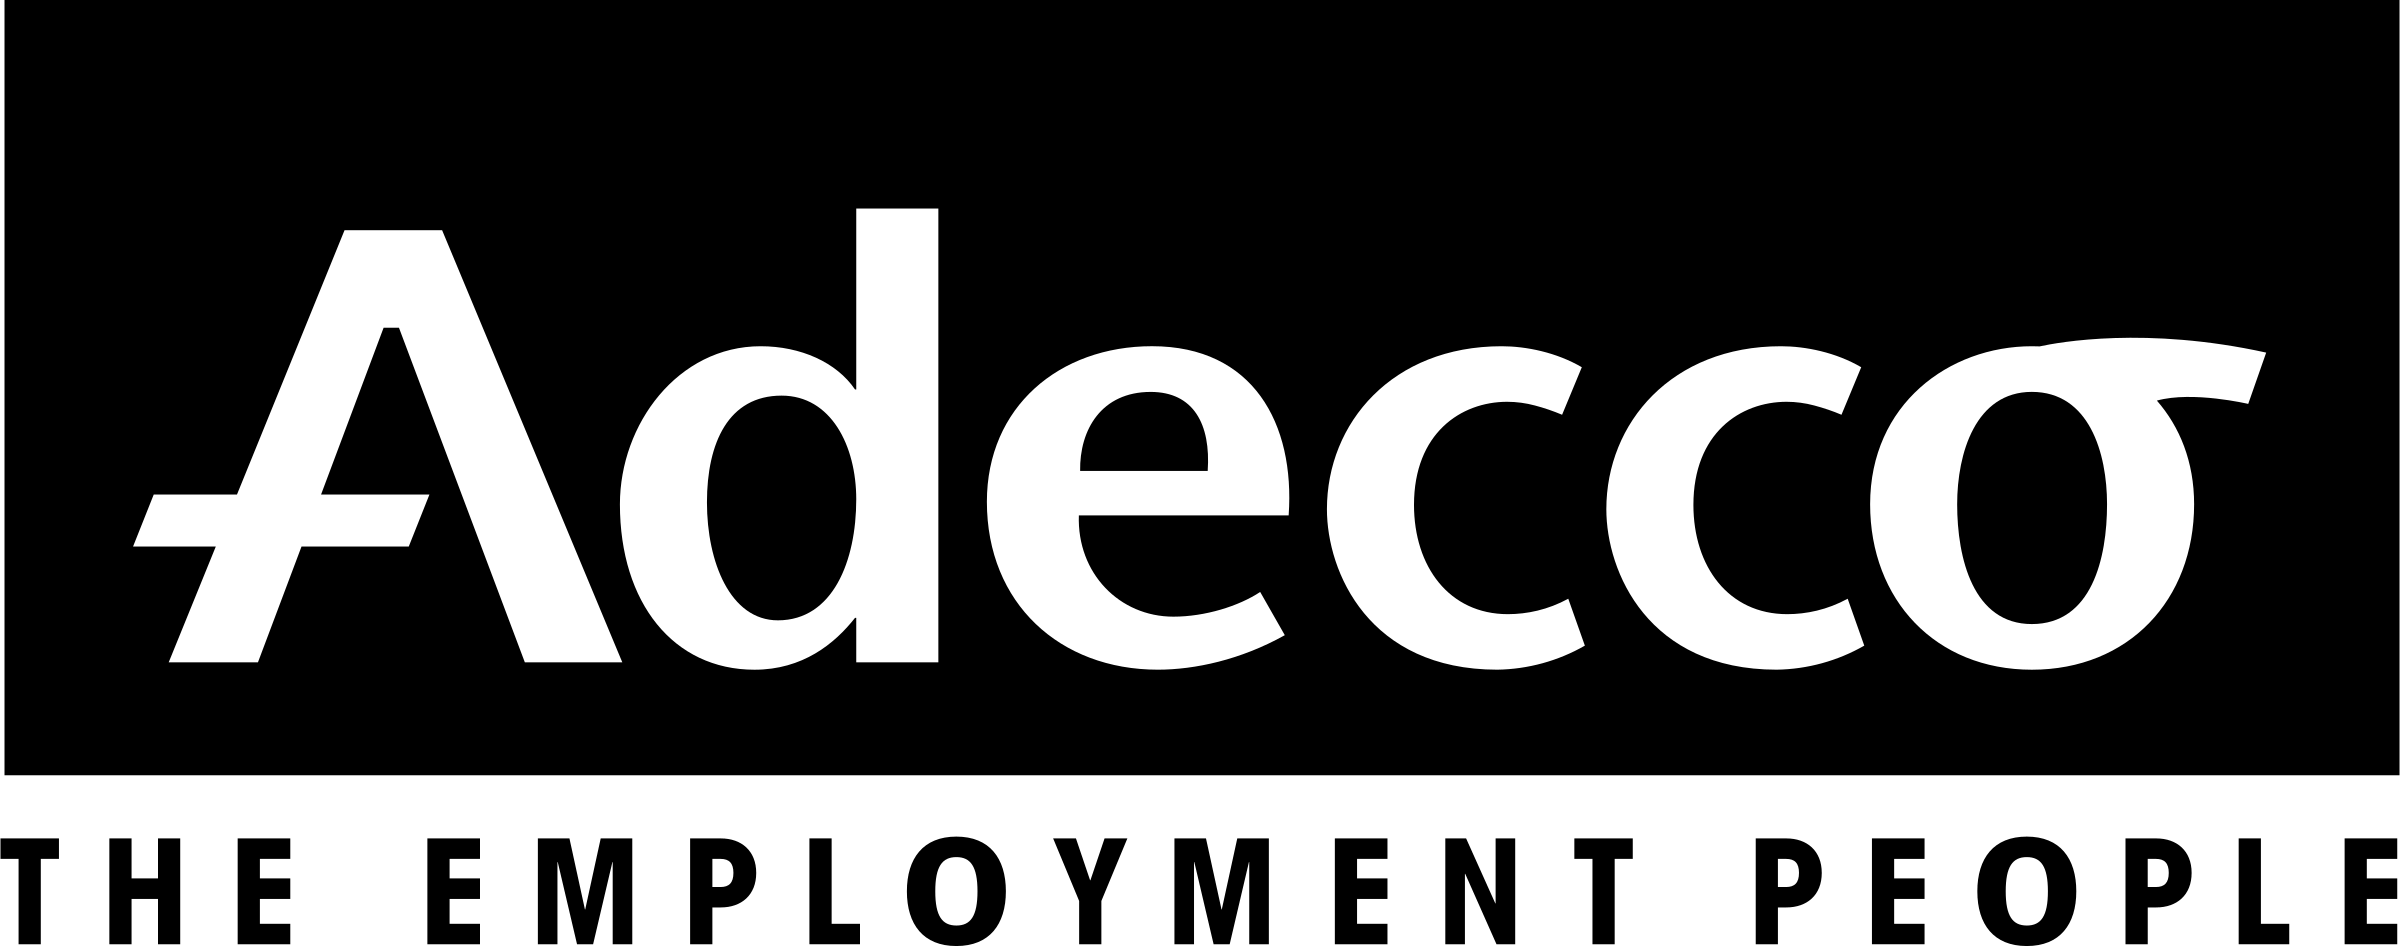 Adecco Logo - Adecco Logo PNG Transparent & SVG Vector - Freebie Supply